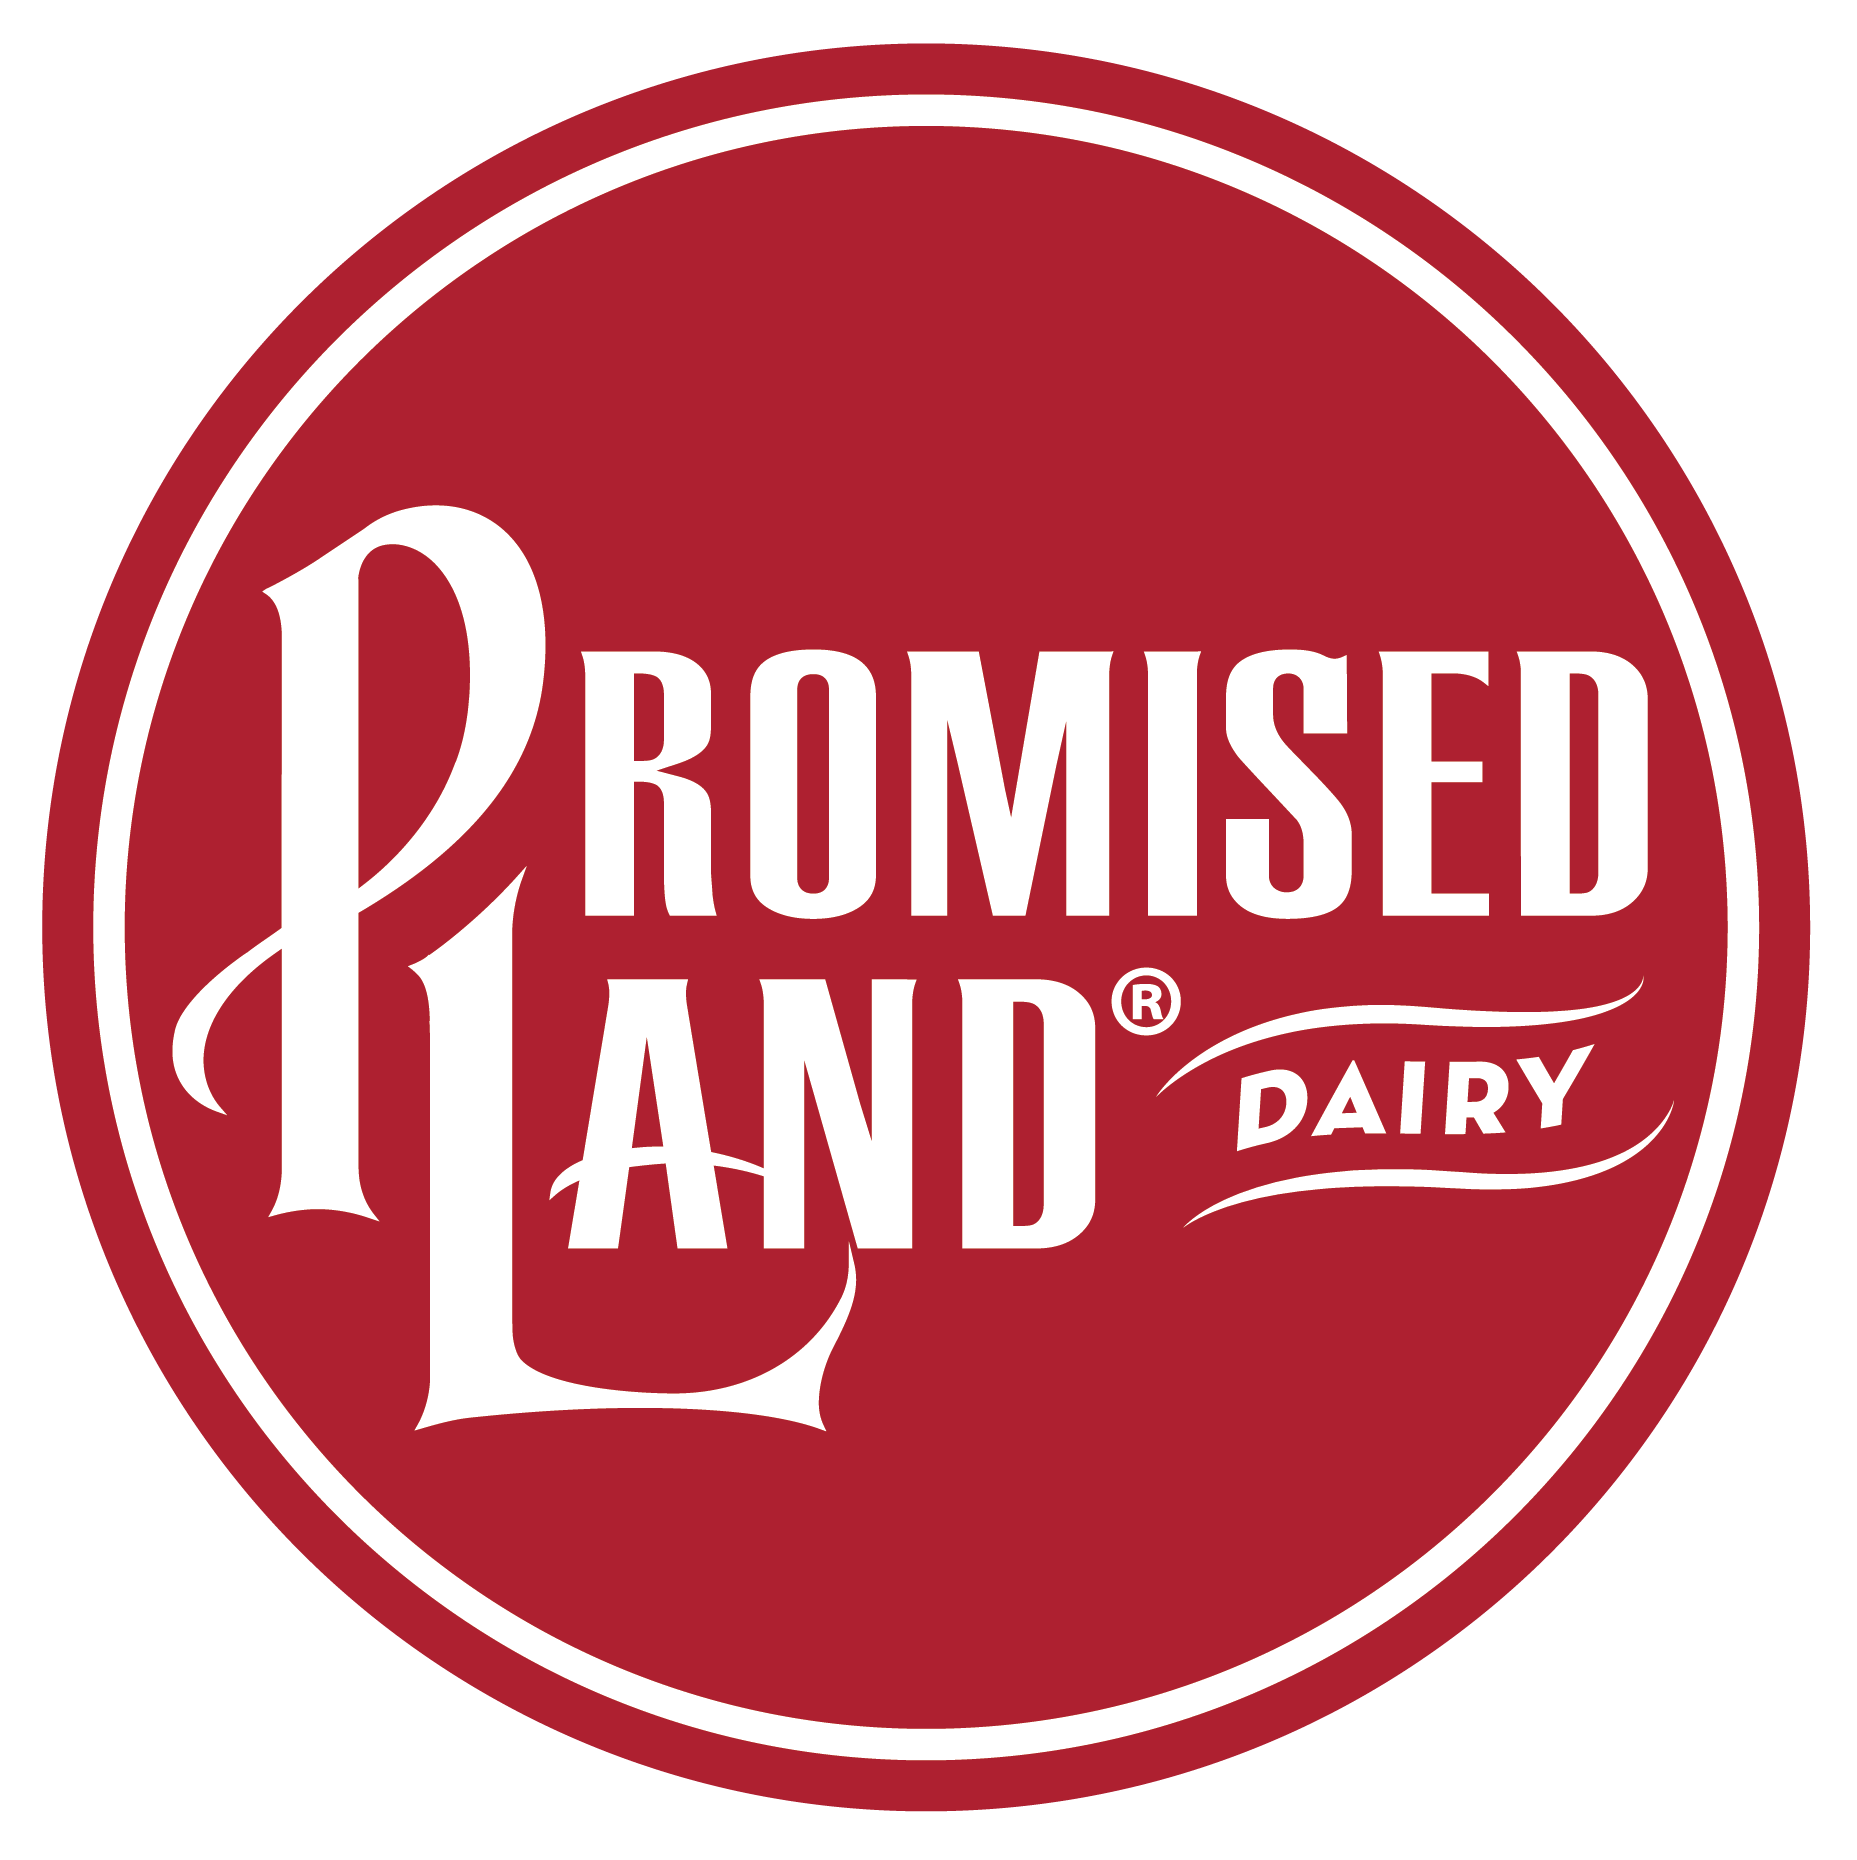 Sponsor Promised Land Dairy